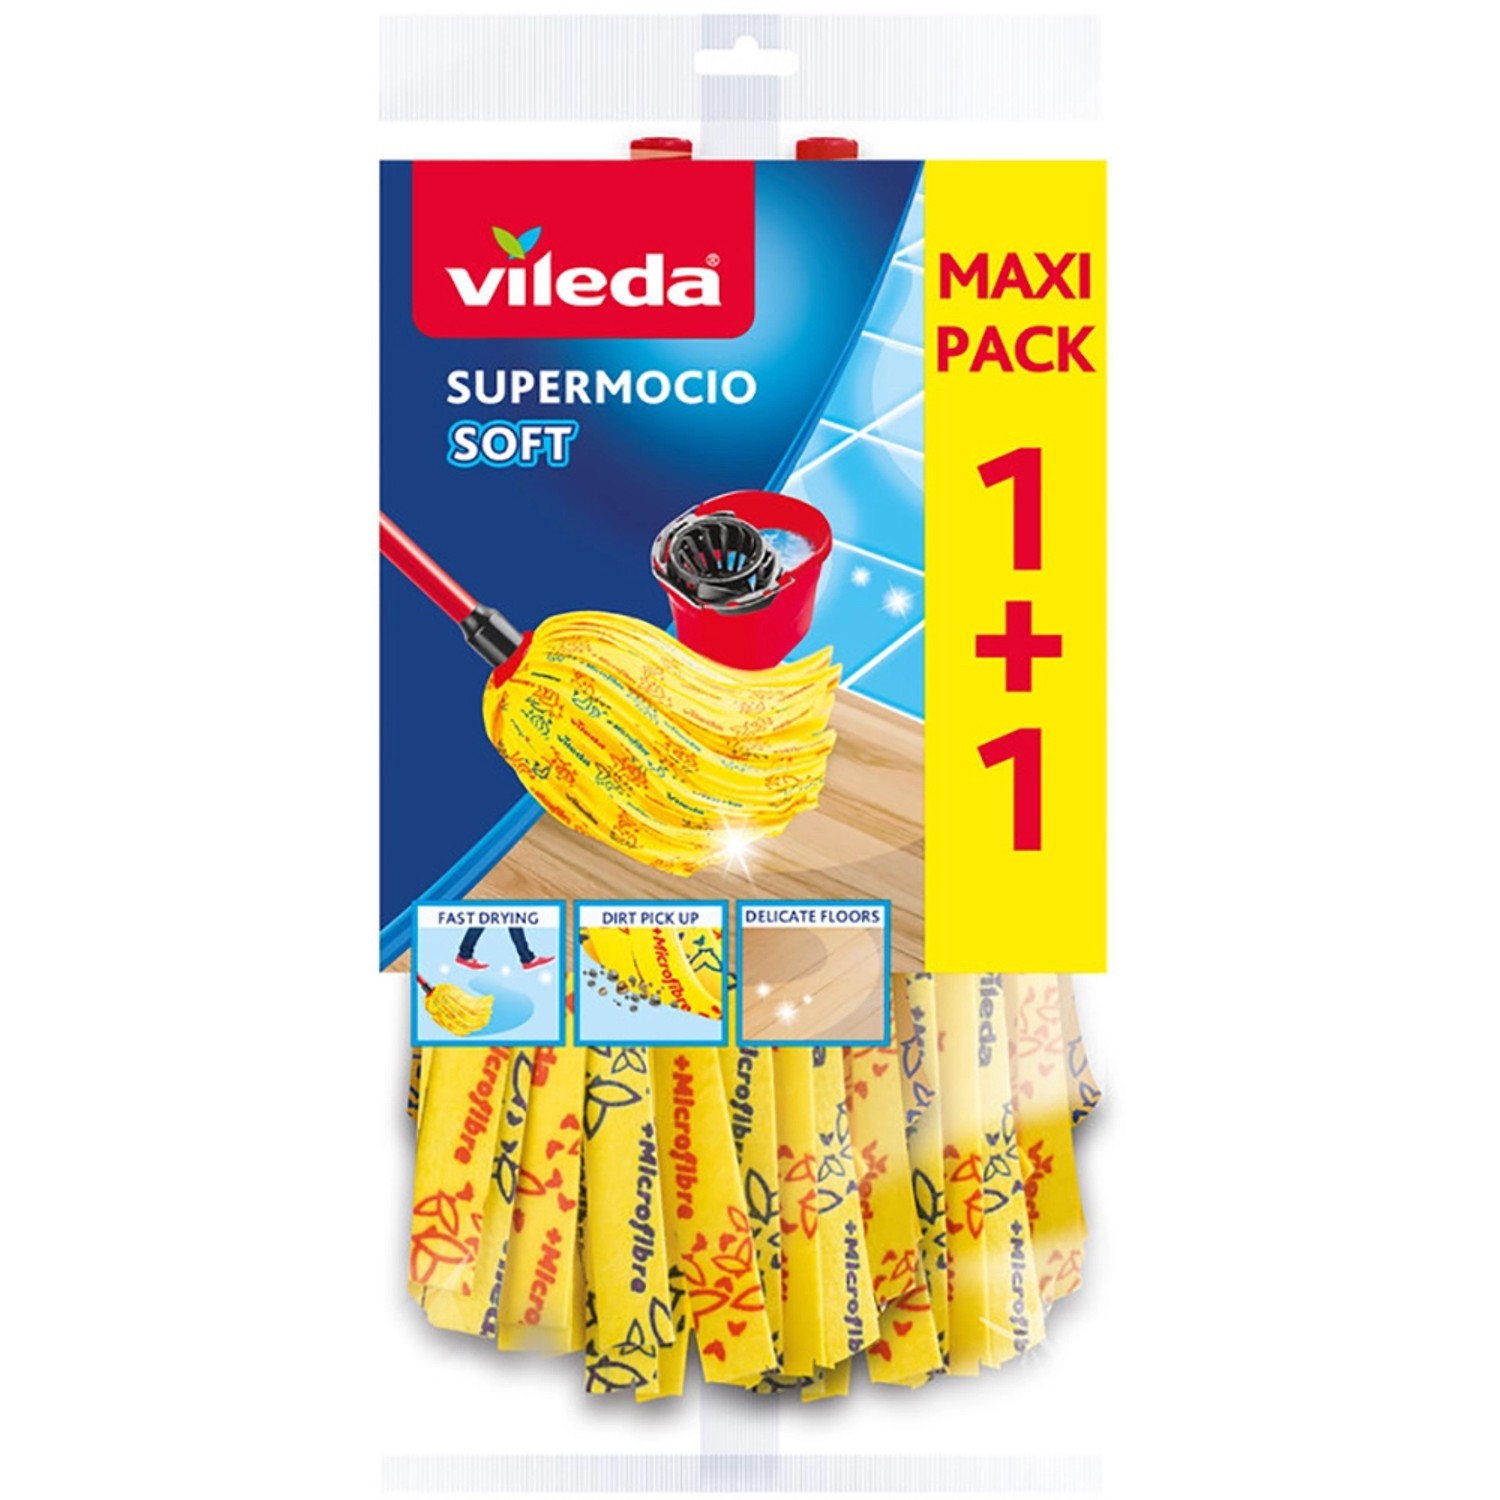 Vileda Ersatzmopp Doppelpack für Wischmopp SuperMocio Soft